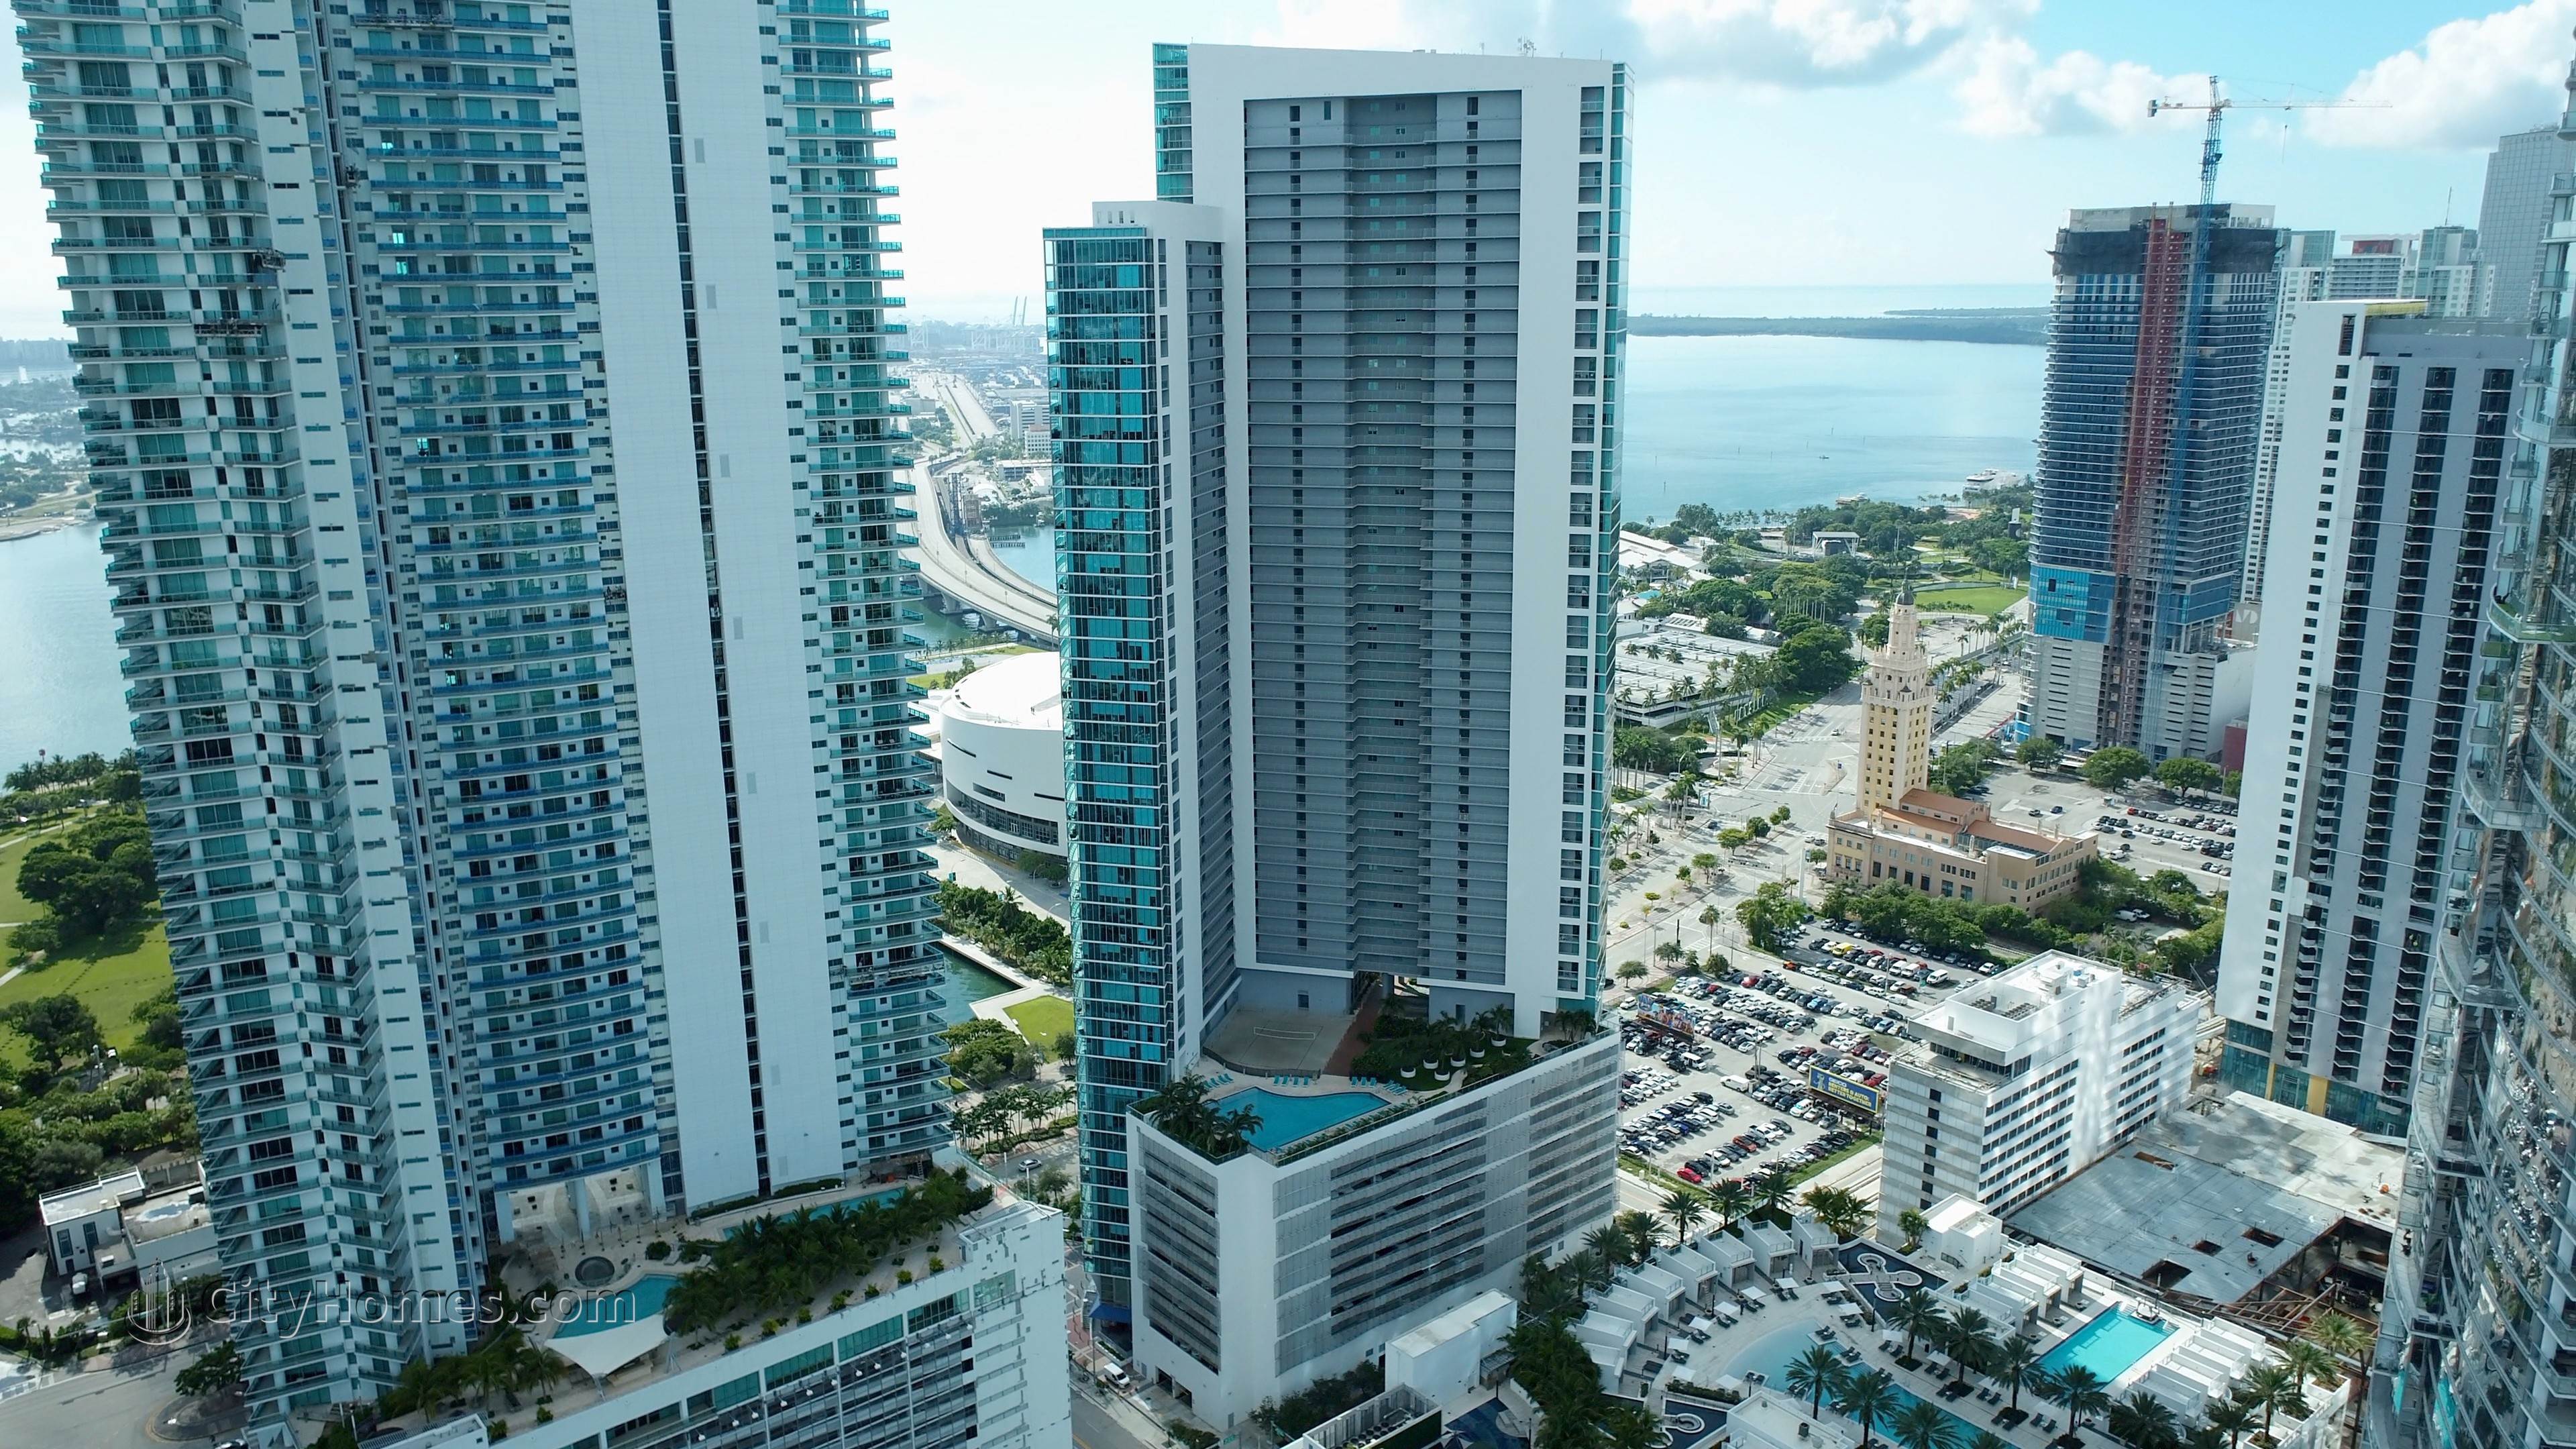 3. 900 Biscayne Bay здание в 900 Biscayne Boulevard, Miami, FL 33132